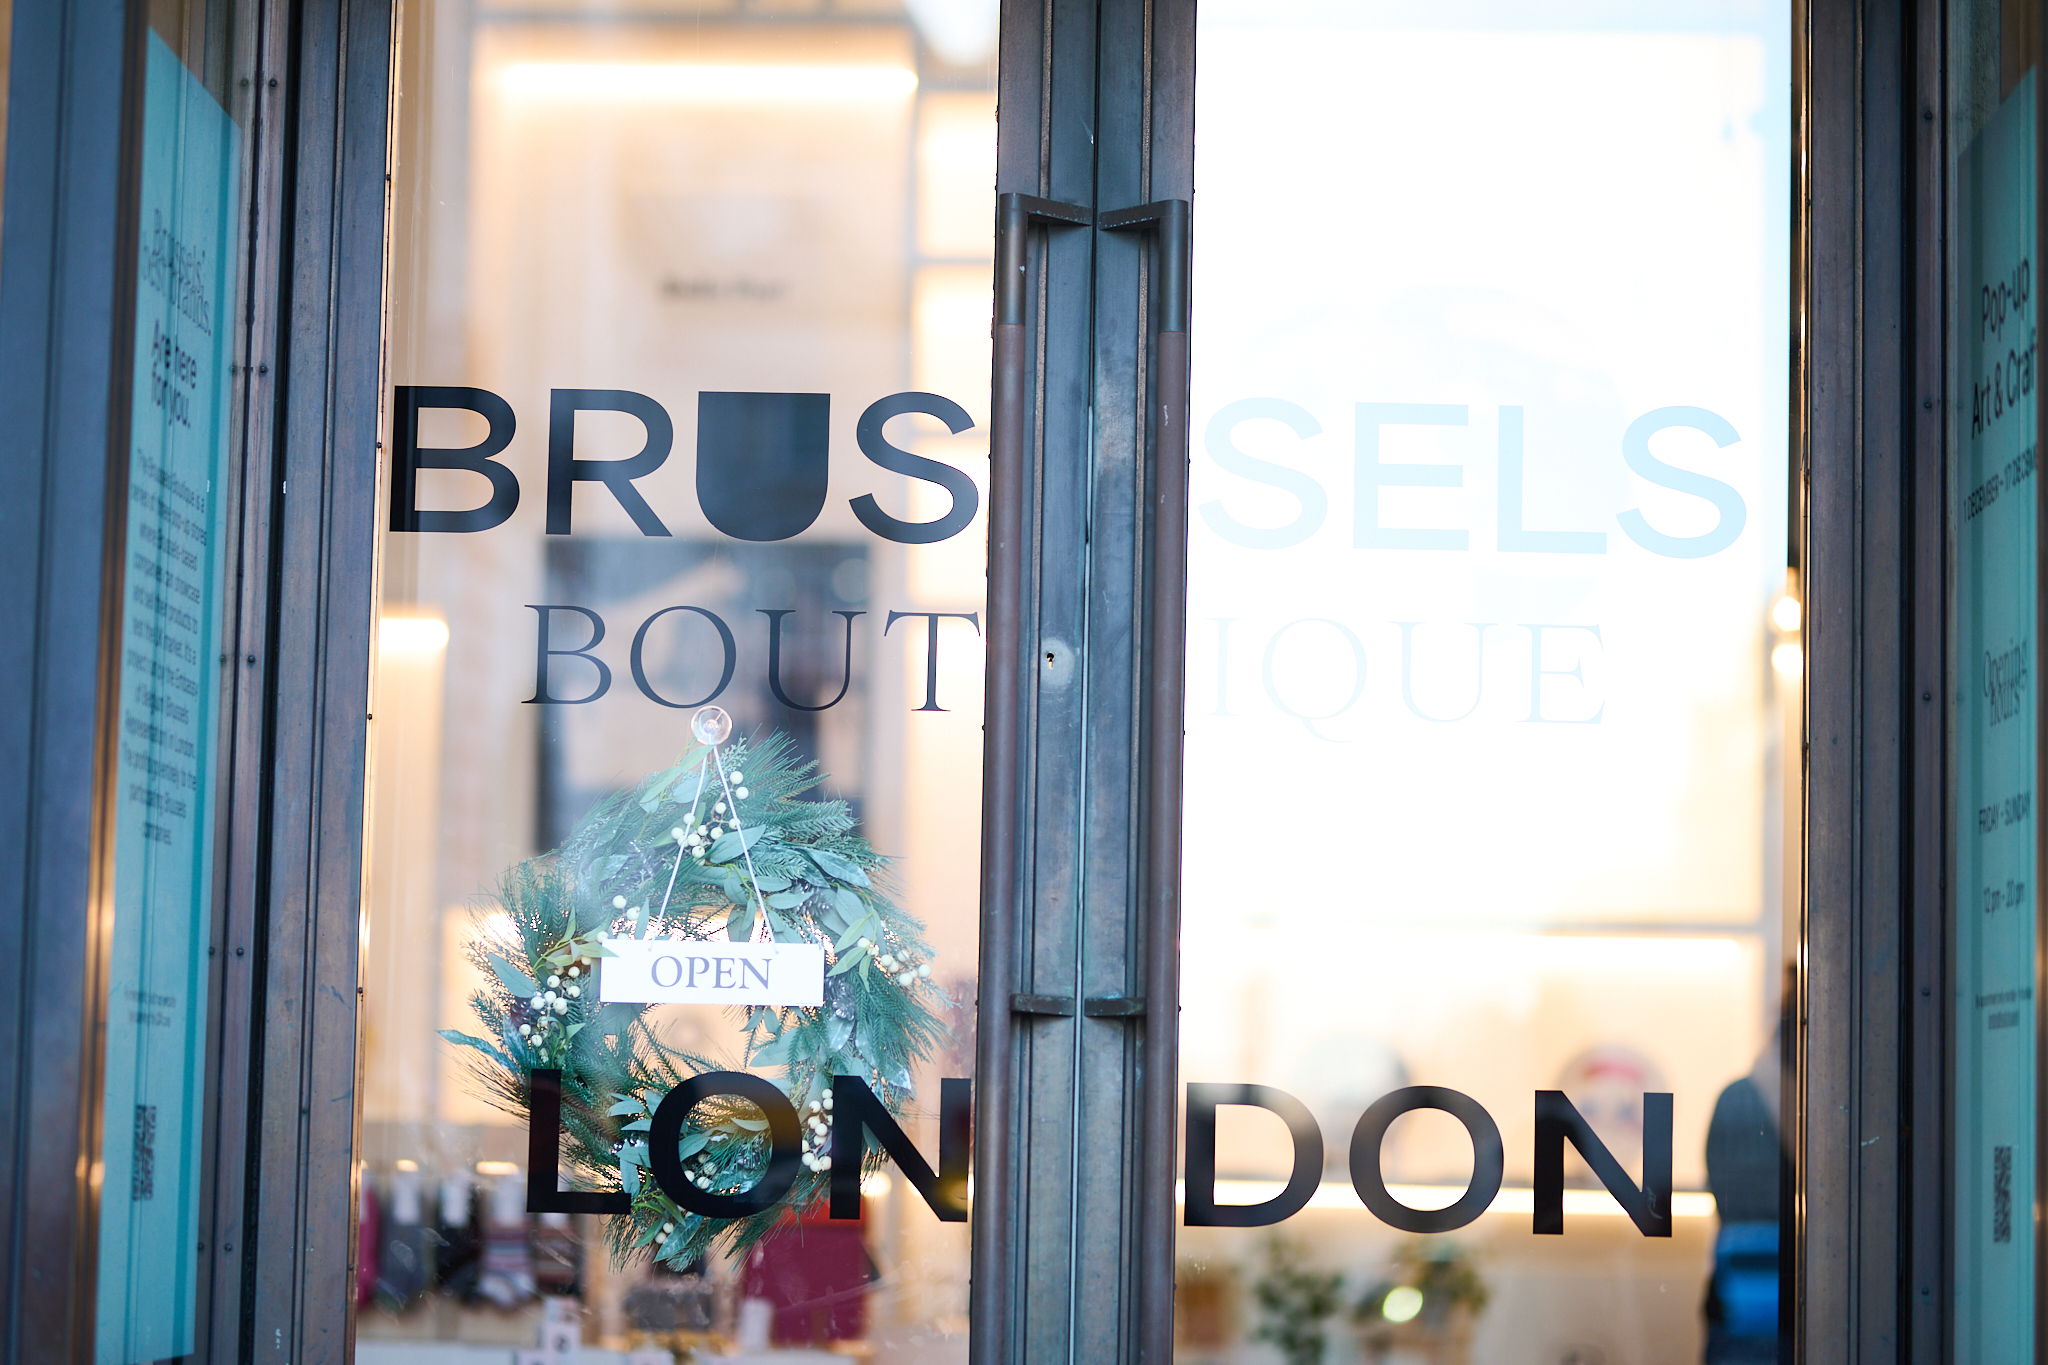 Brussels Boutique in London ©hub.brussels